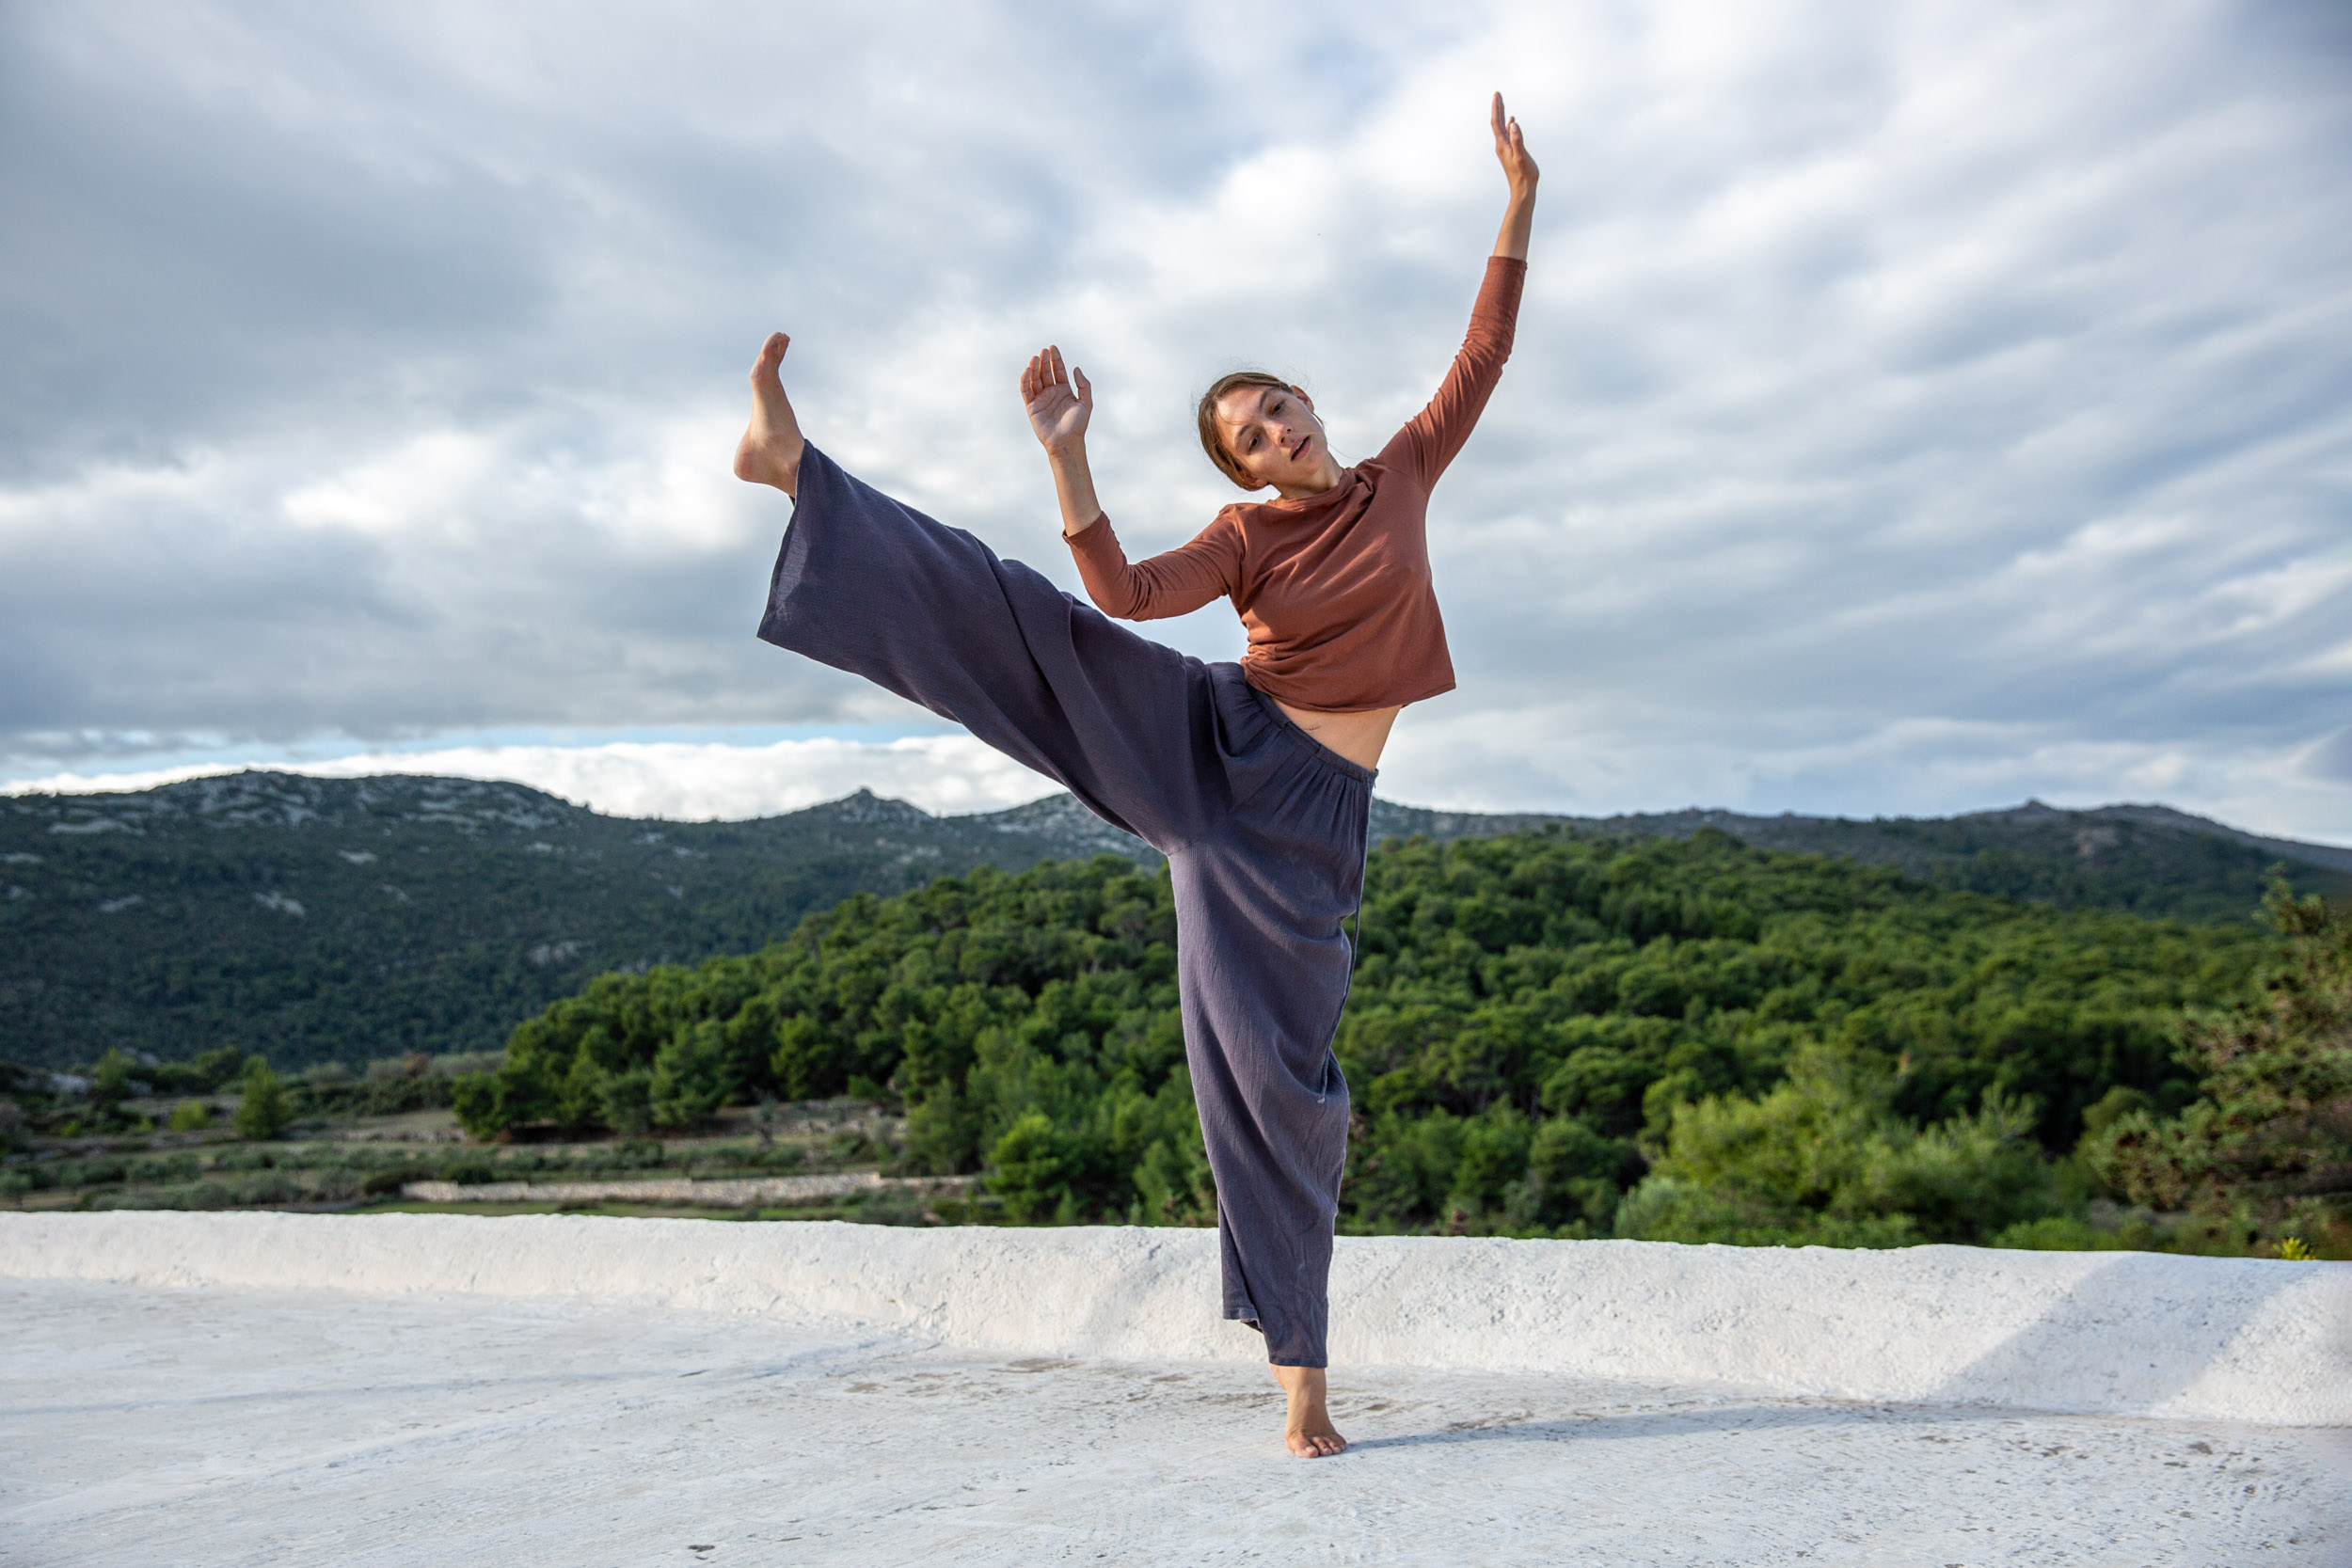 Maria Vincentelli for Dancers on Rooftops by Ben Hopper (2021)